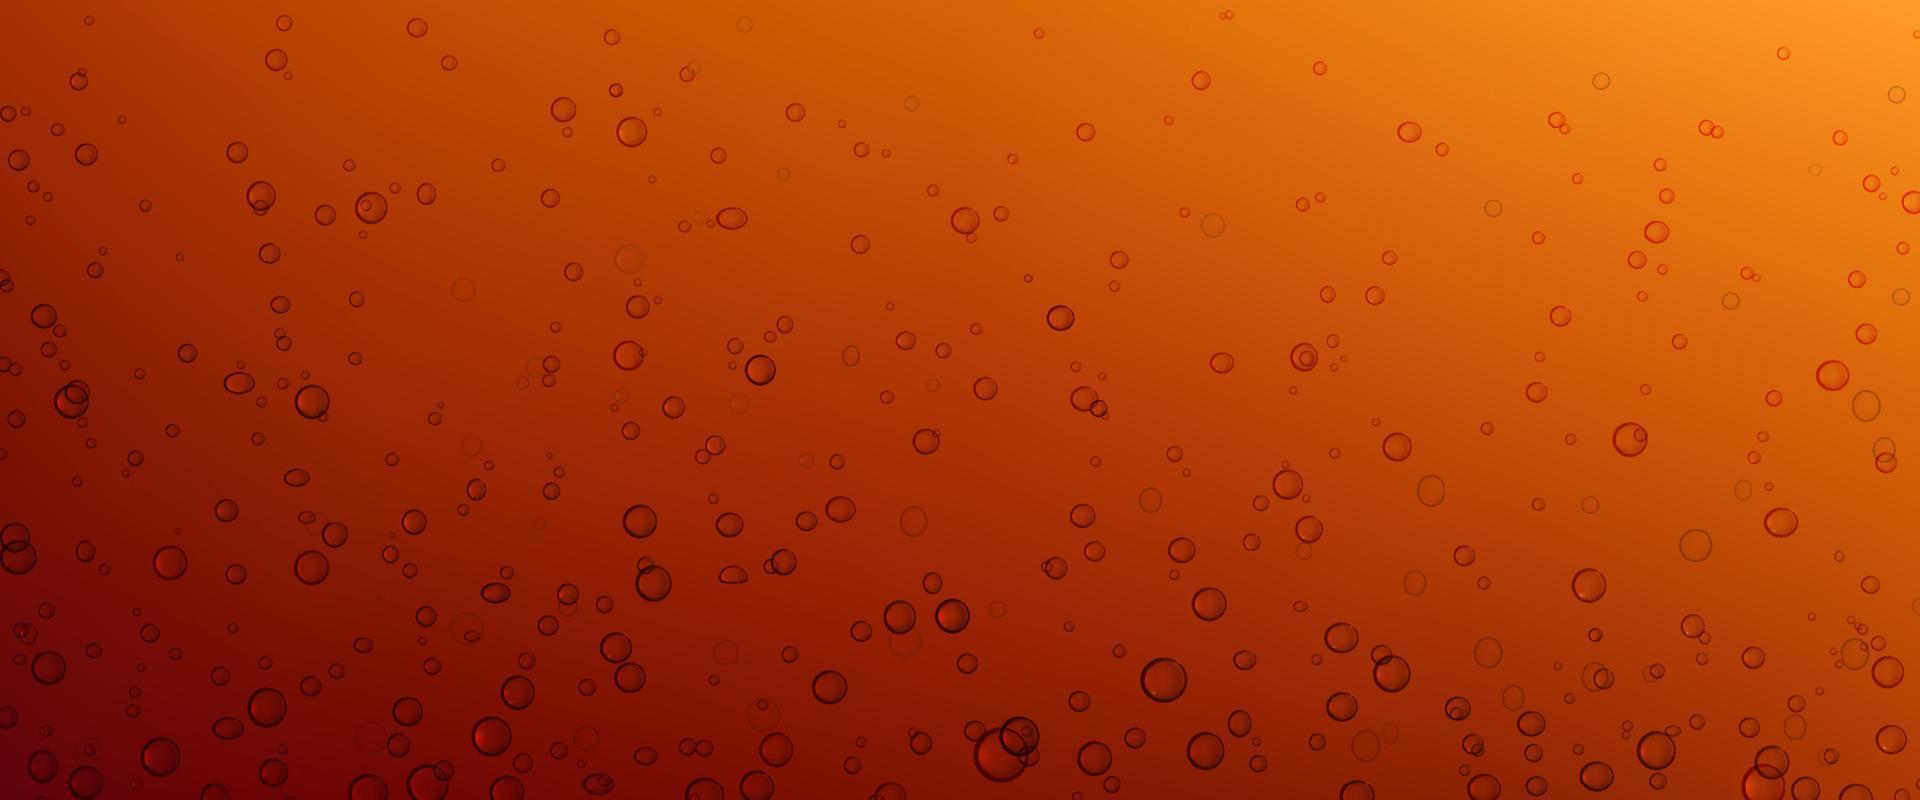 Air bubbles of cola, soda drink or beer texture vector